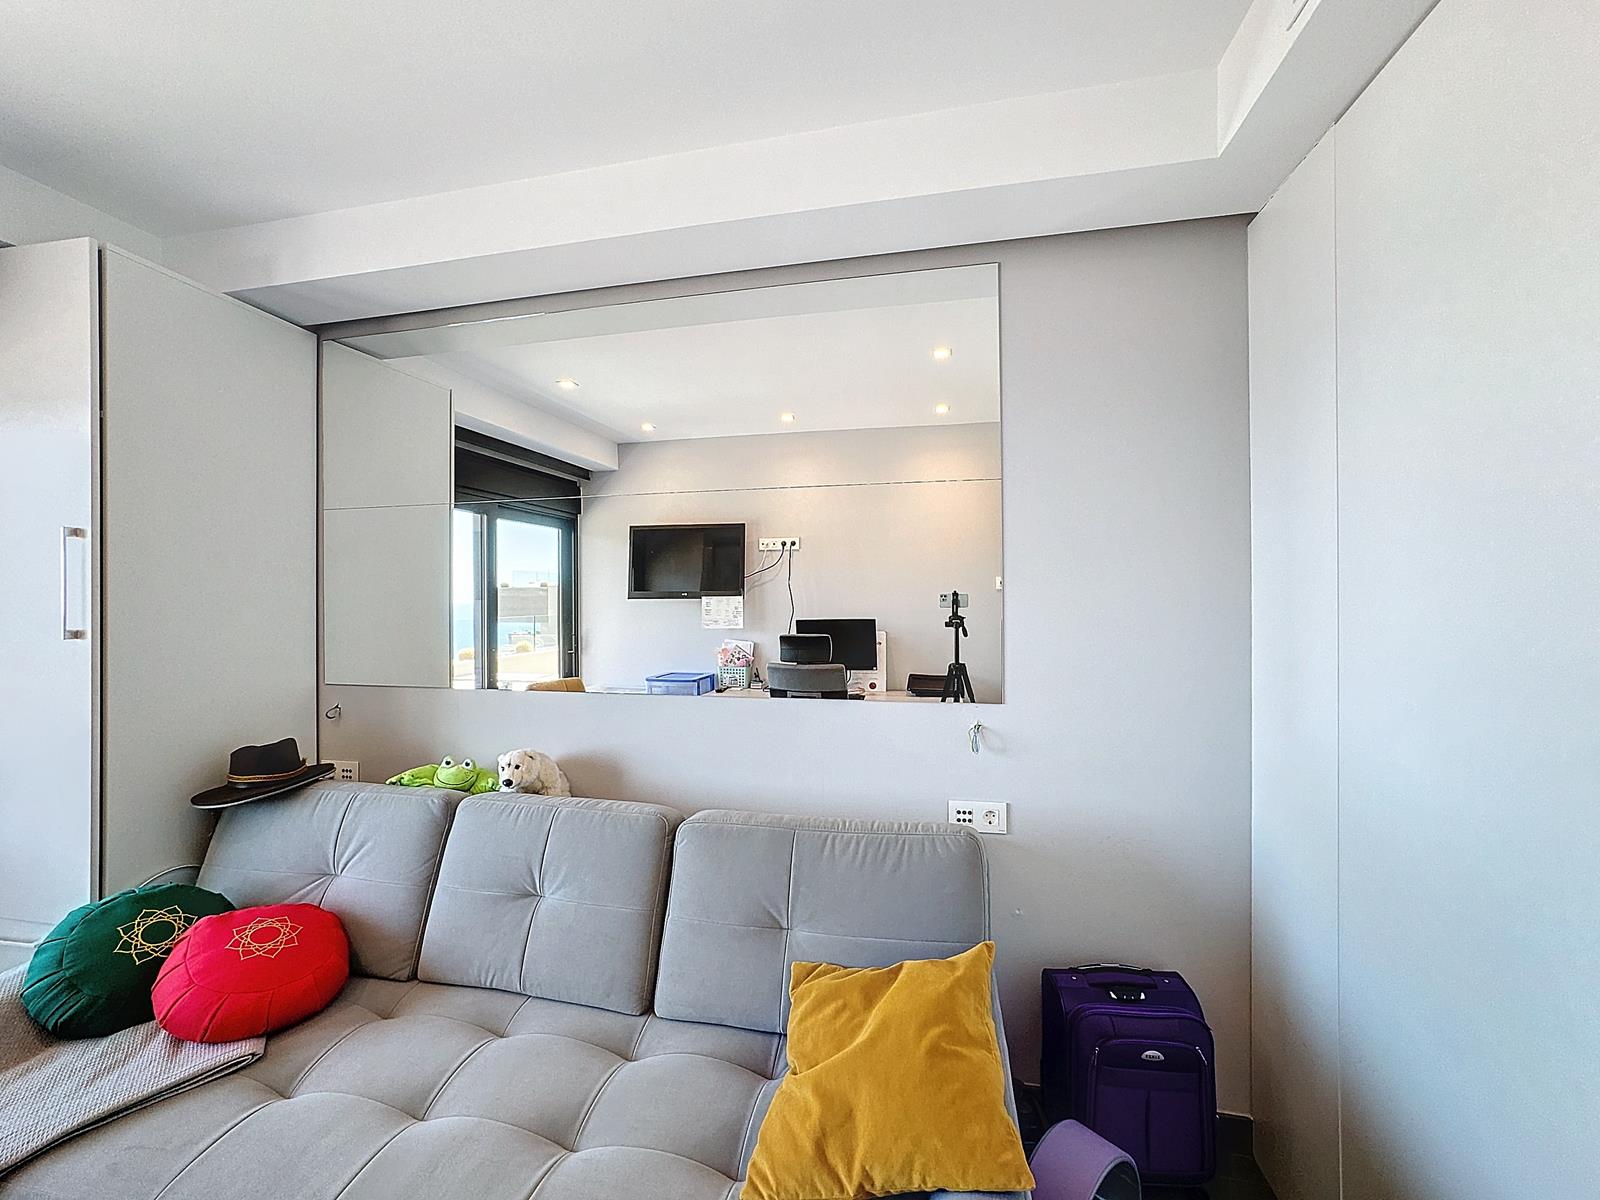 Cumbre del Sol luxury apartment with sea views